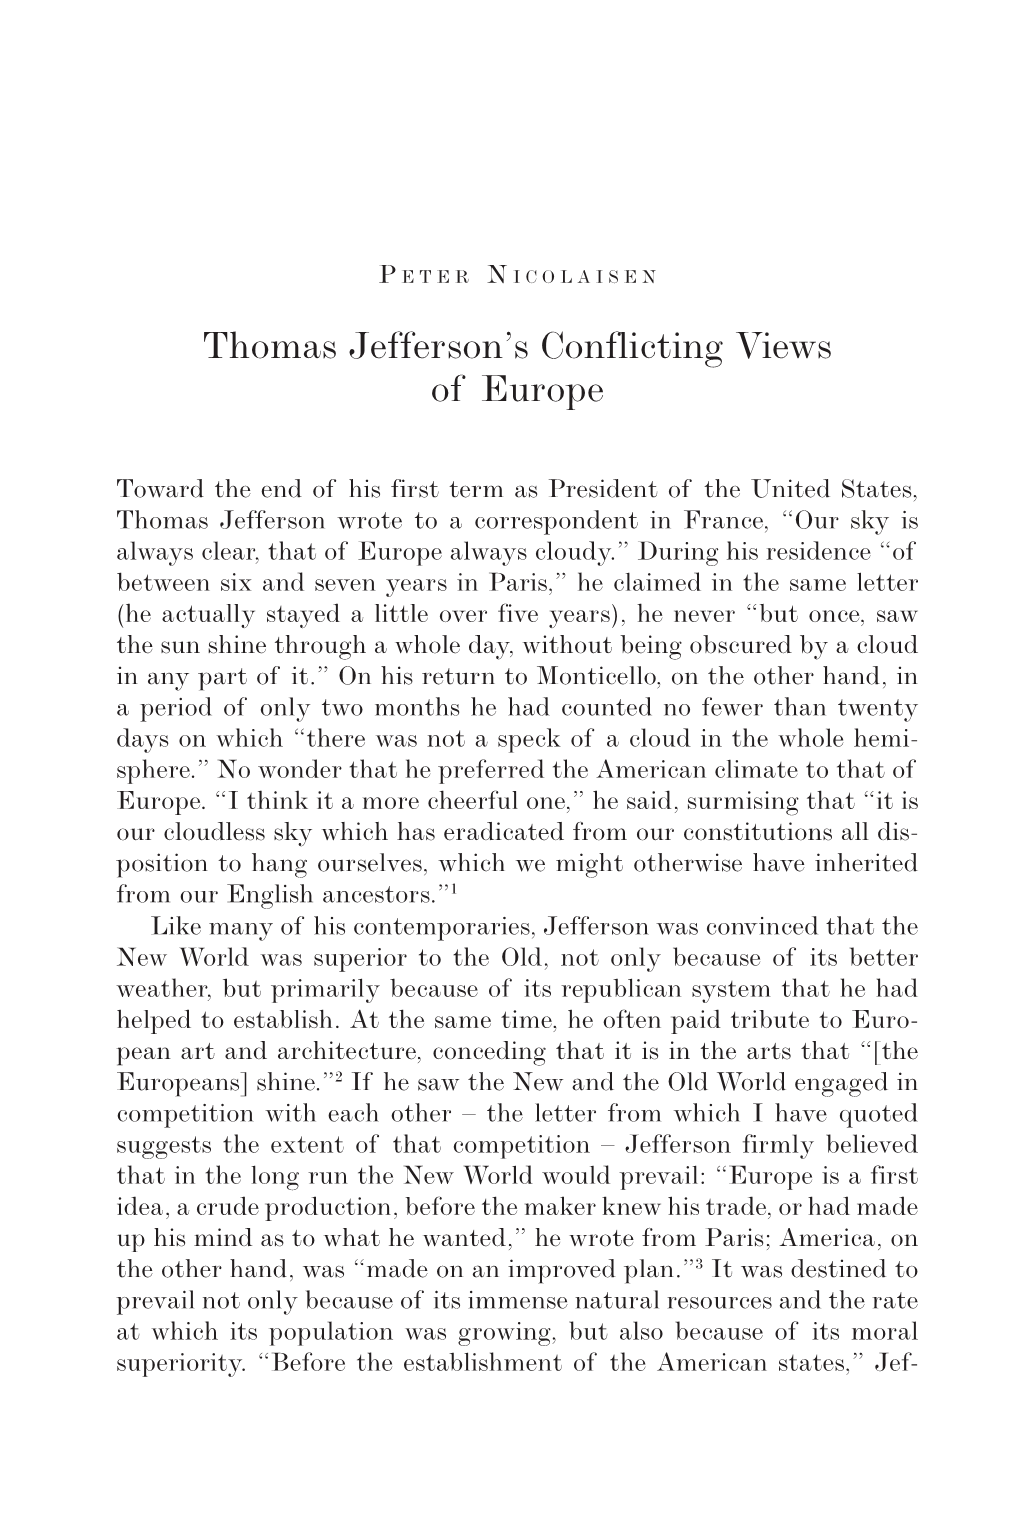 Thomas Jefferson's Conflicting Views of Europe